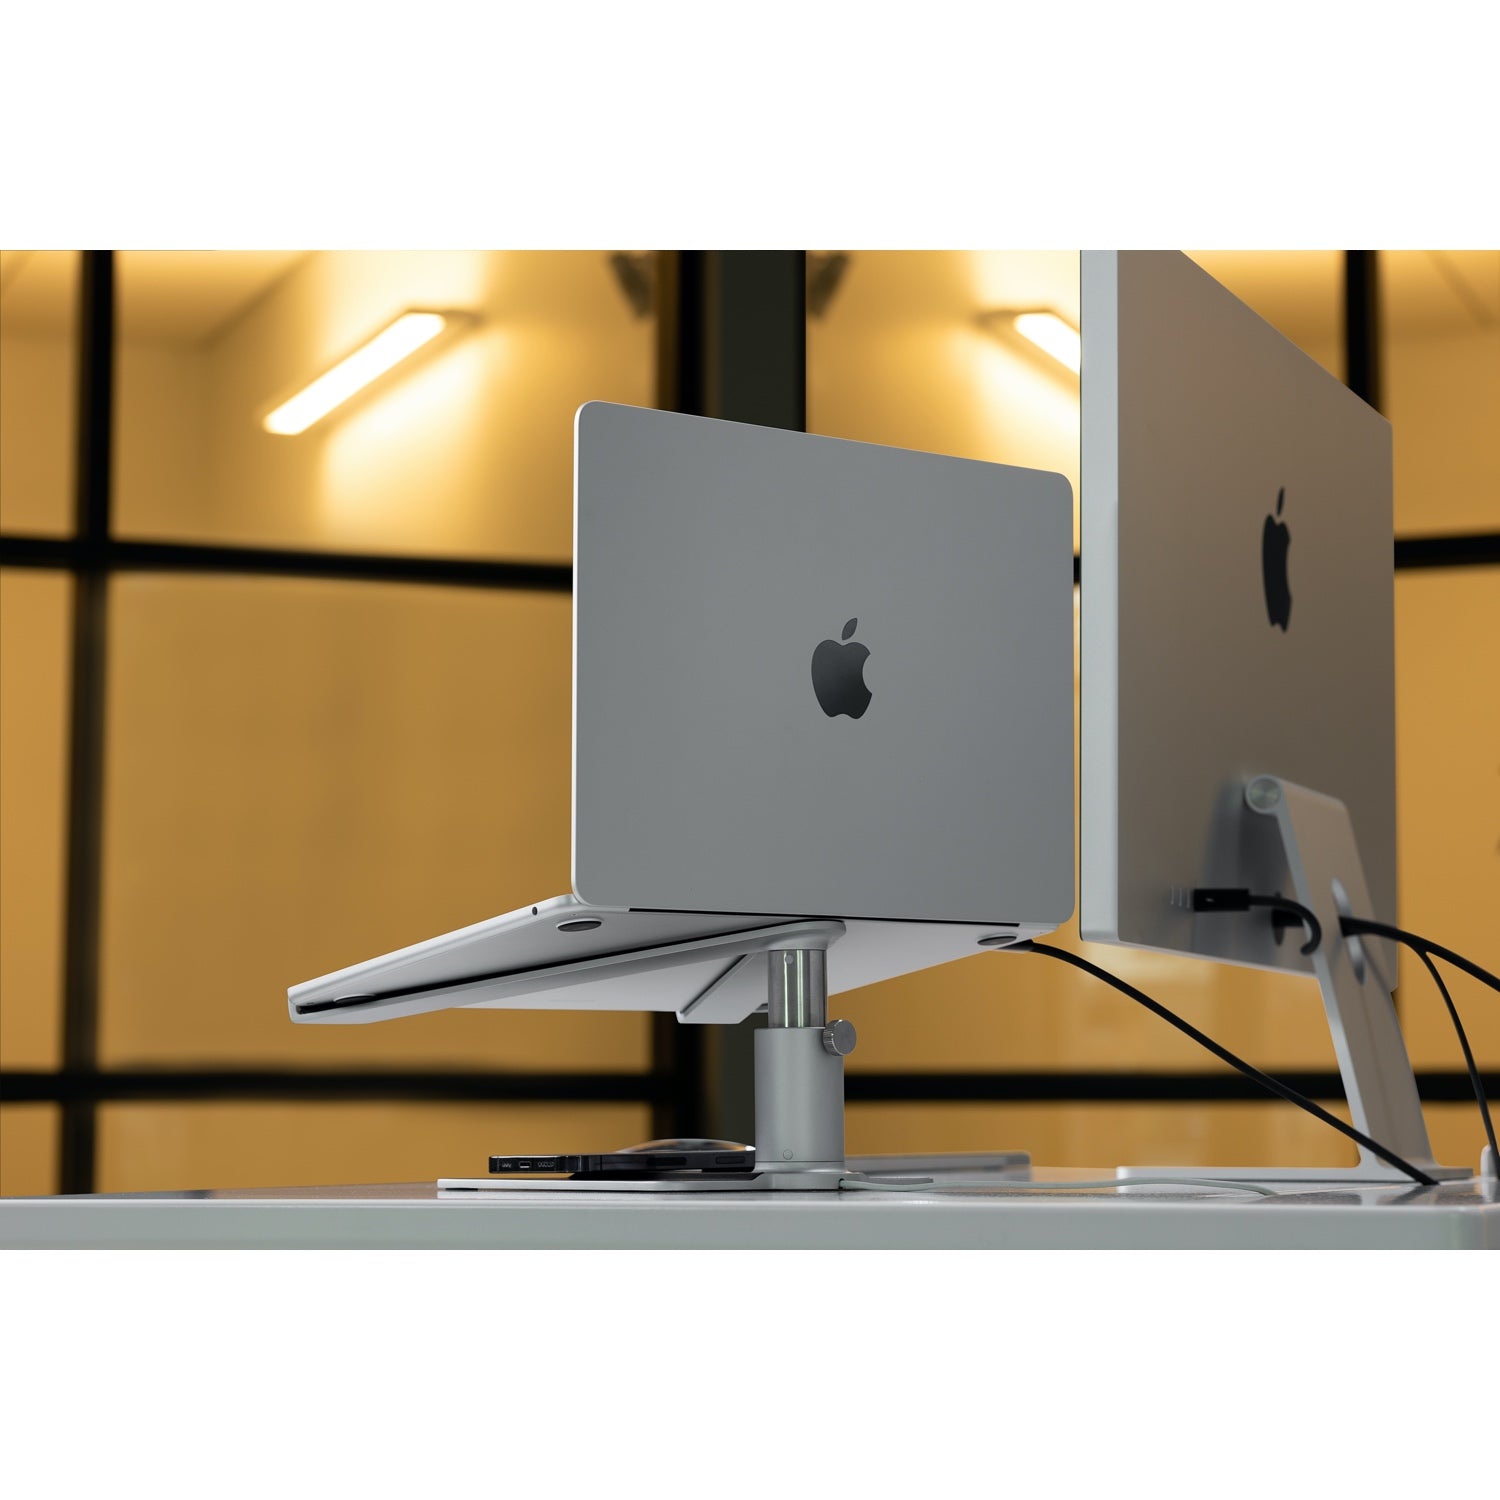 Twelve South HiRise for MacBook / Laptops